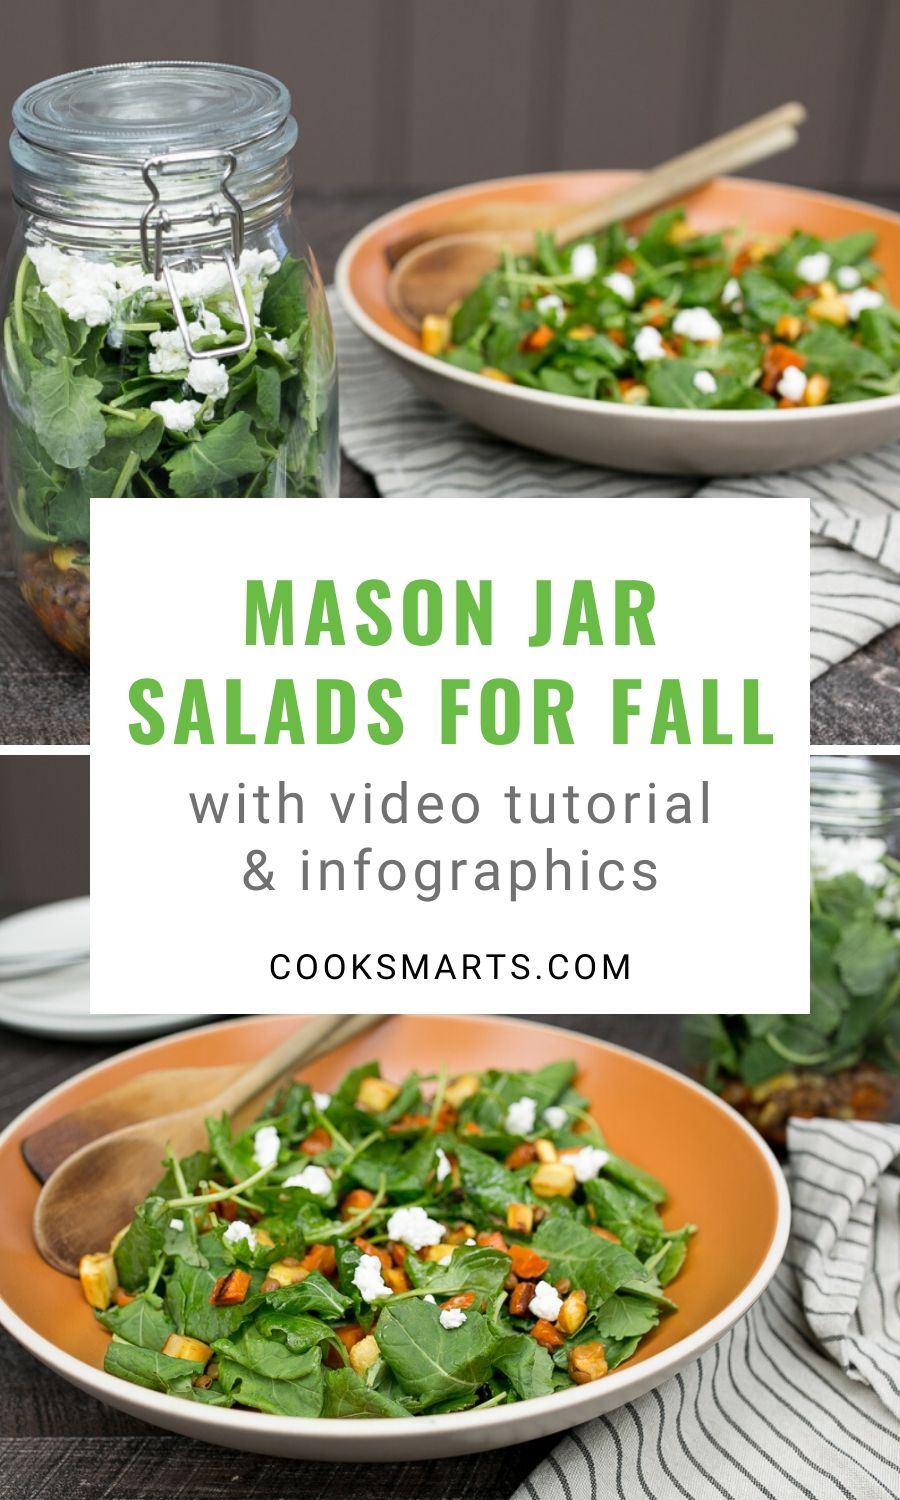 How to Make a Fall Mason Jar Salad | Cook Smarts